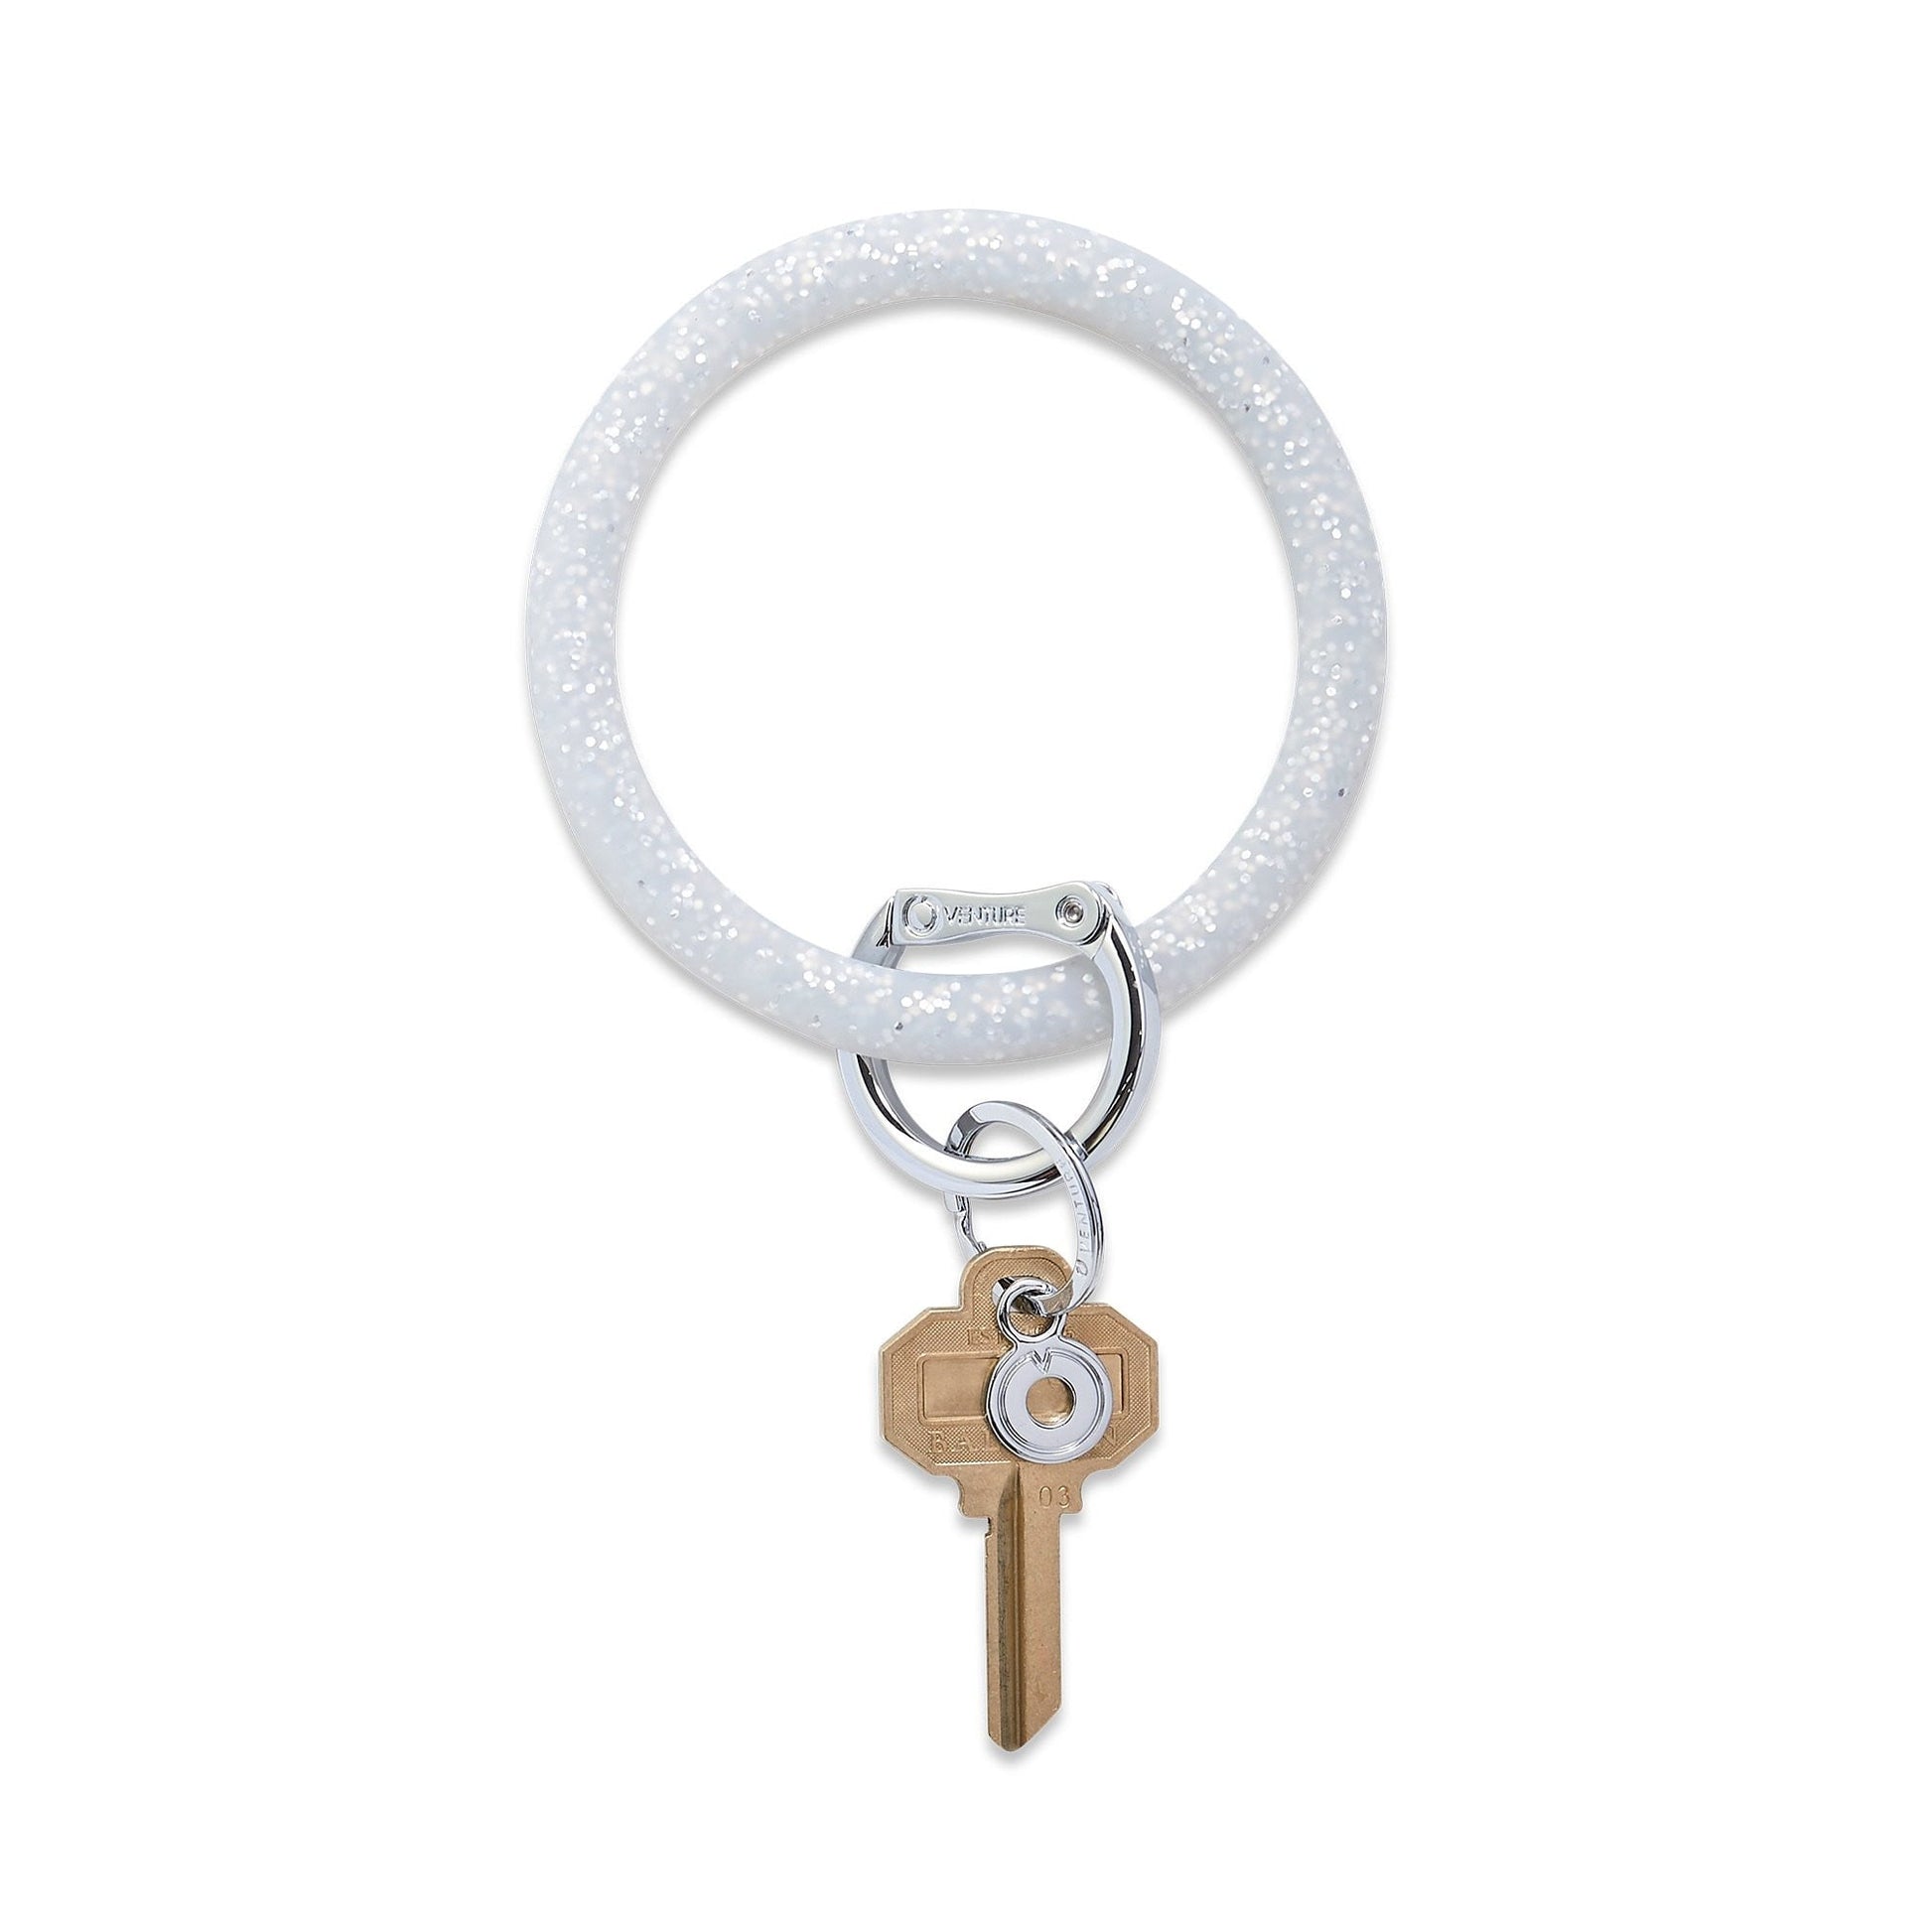 Quicksilver confetti silicone big o key ring with specs of silver glitter and silver locking clasp 